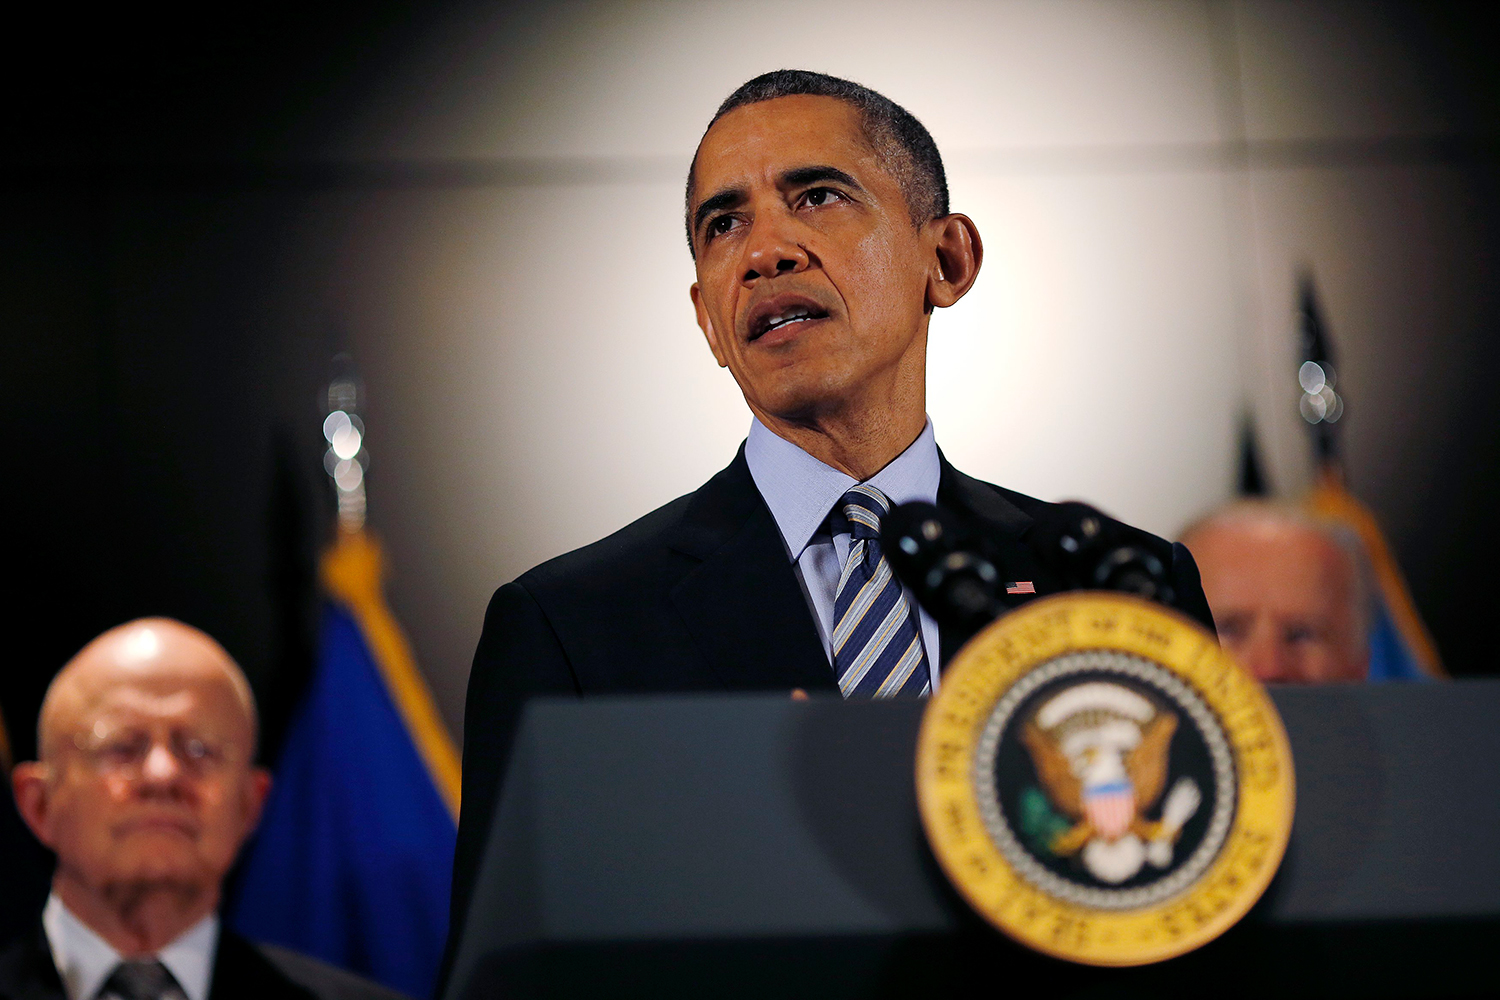 Obama asegura que no existe amenaza "creíble ni específica" de un ataque terrorista